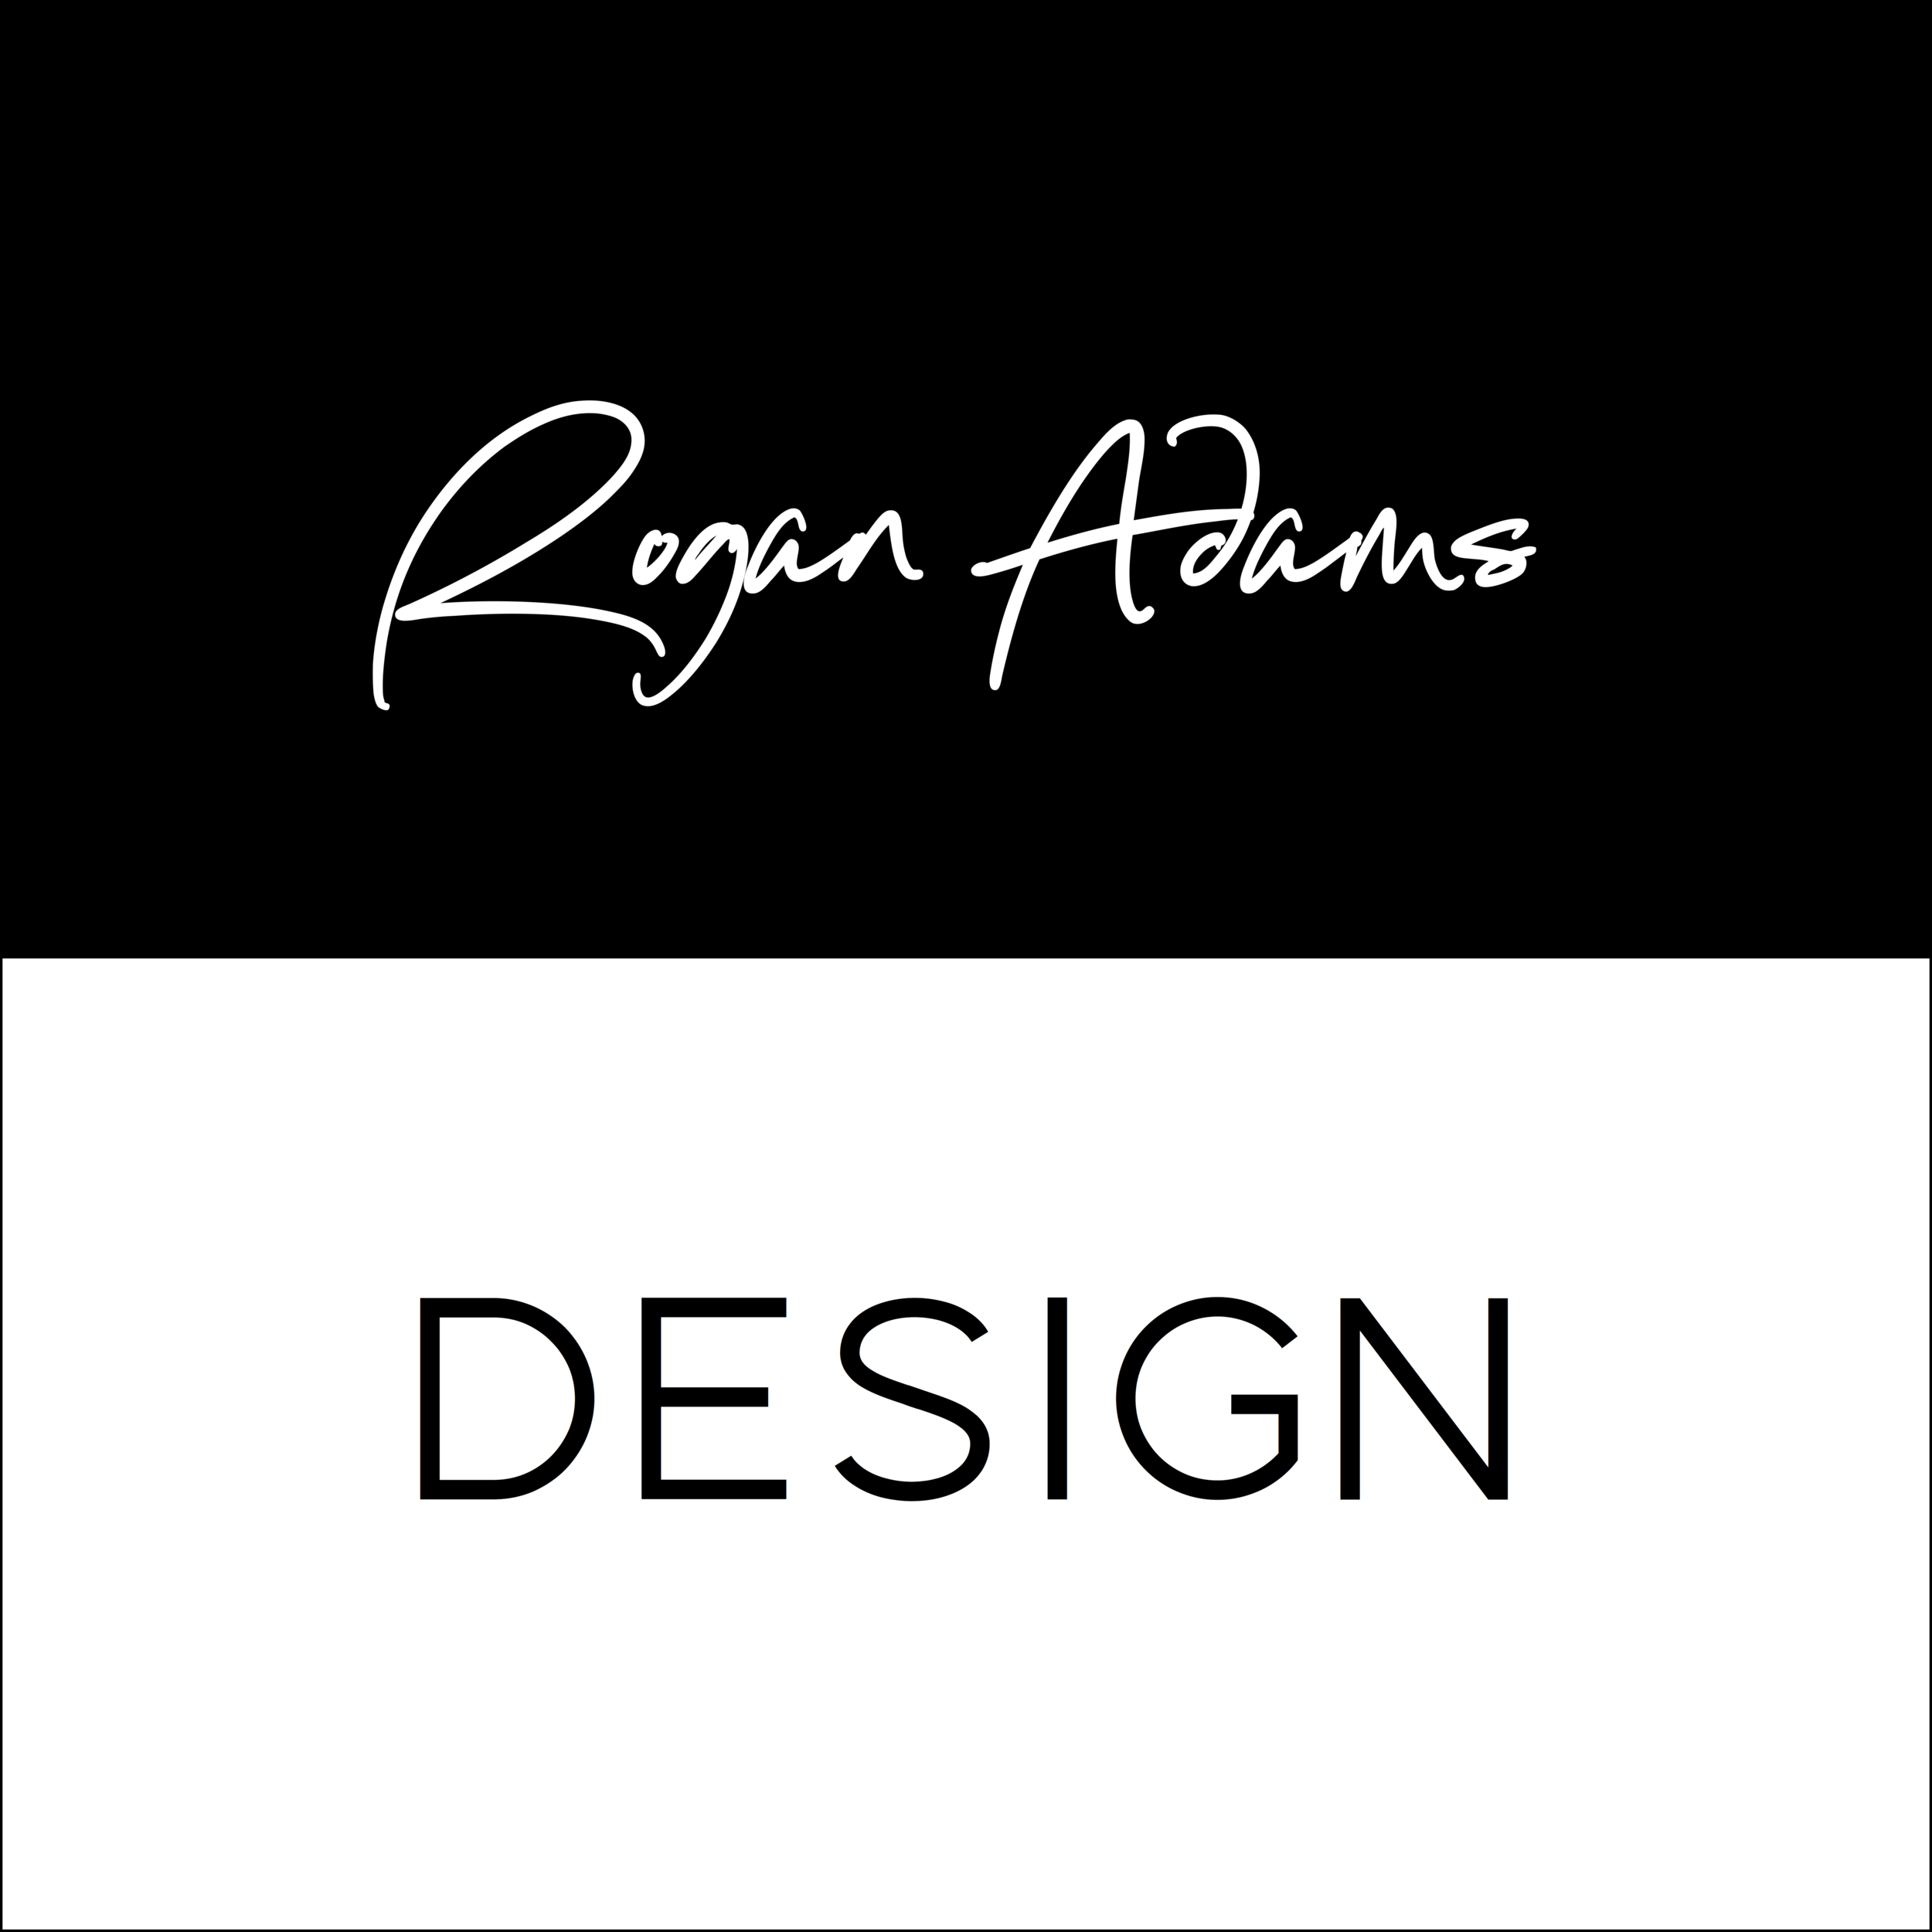 Rogan Adams Design